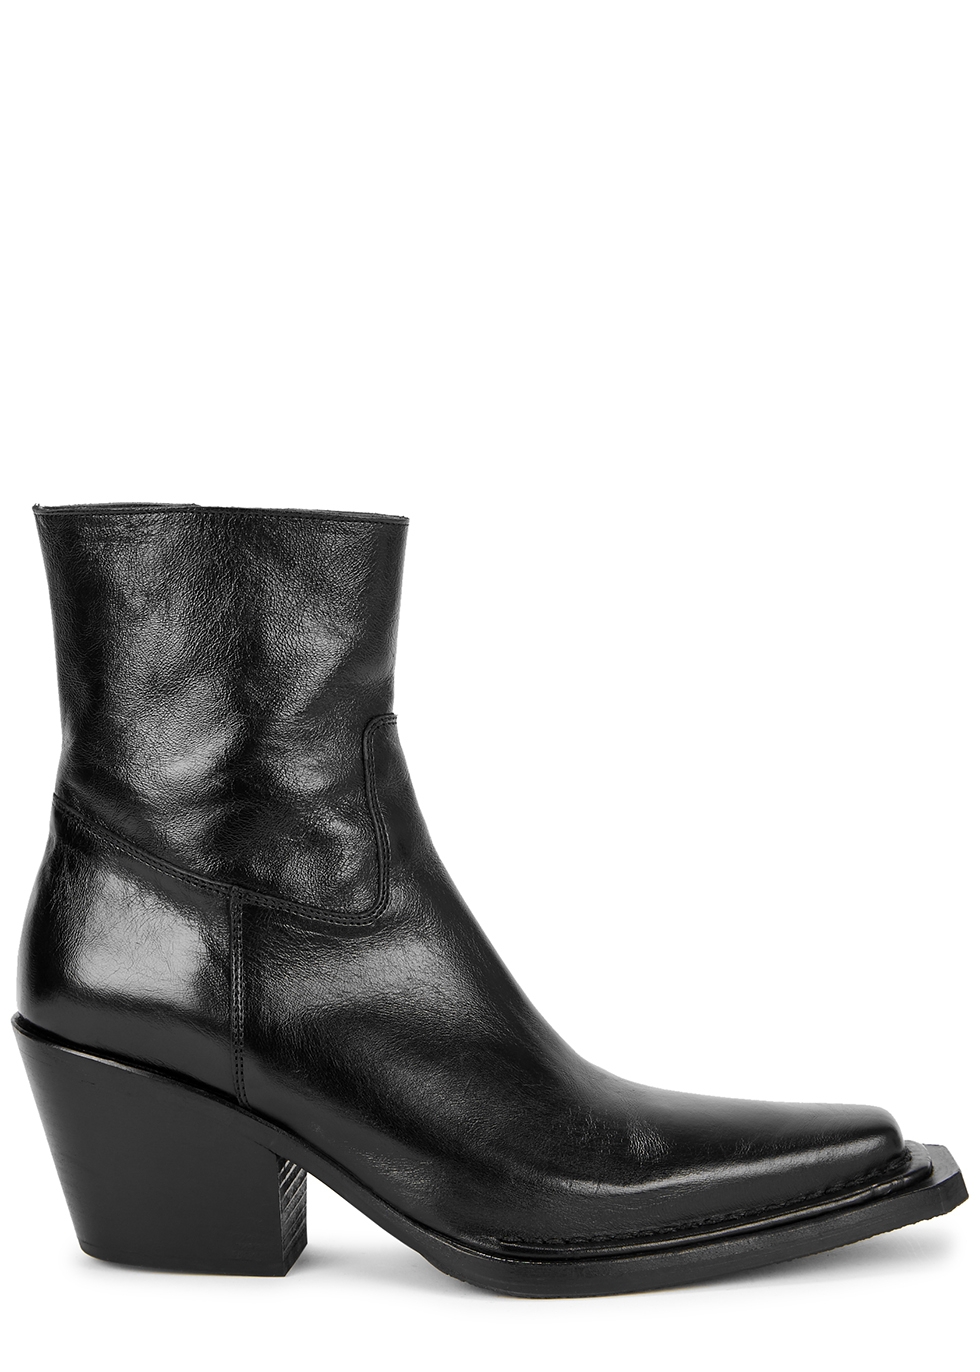 Acne Studios Bruna black leather ankle boots - Harvey Nichols